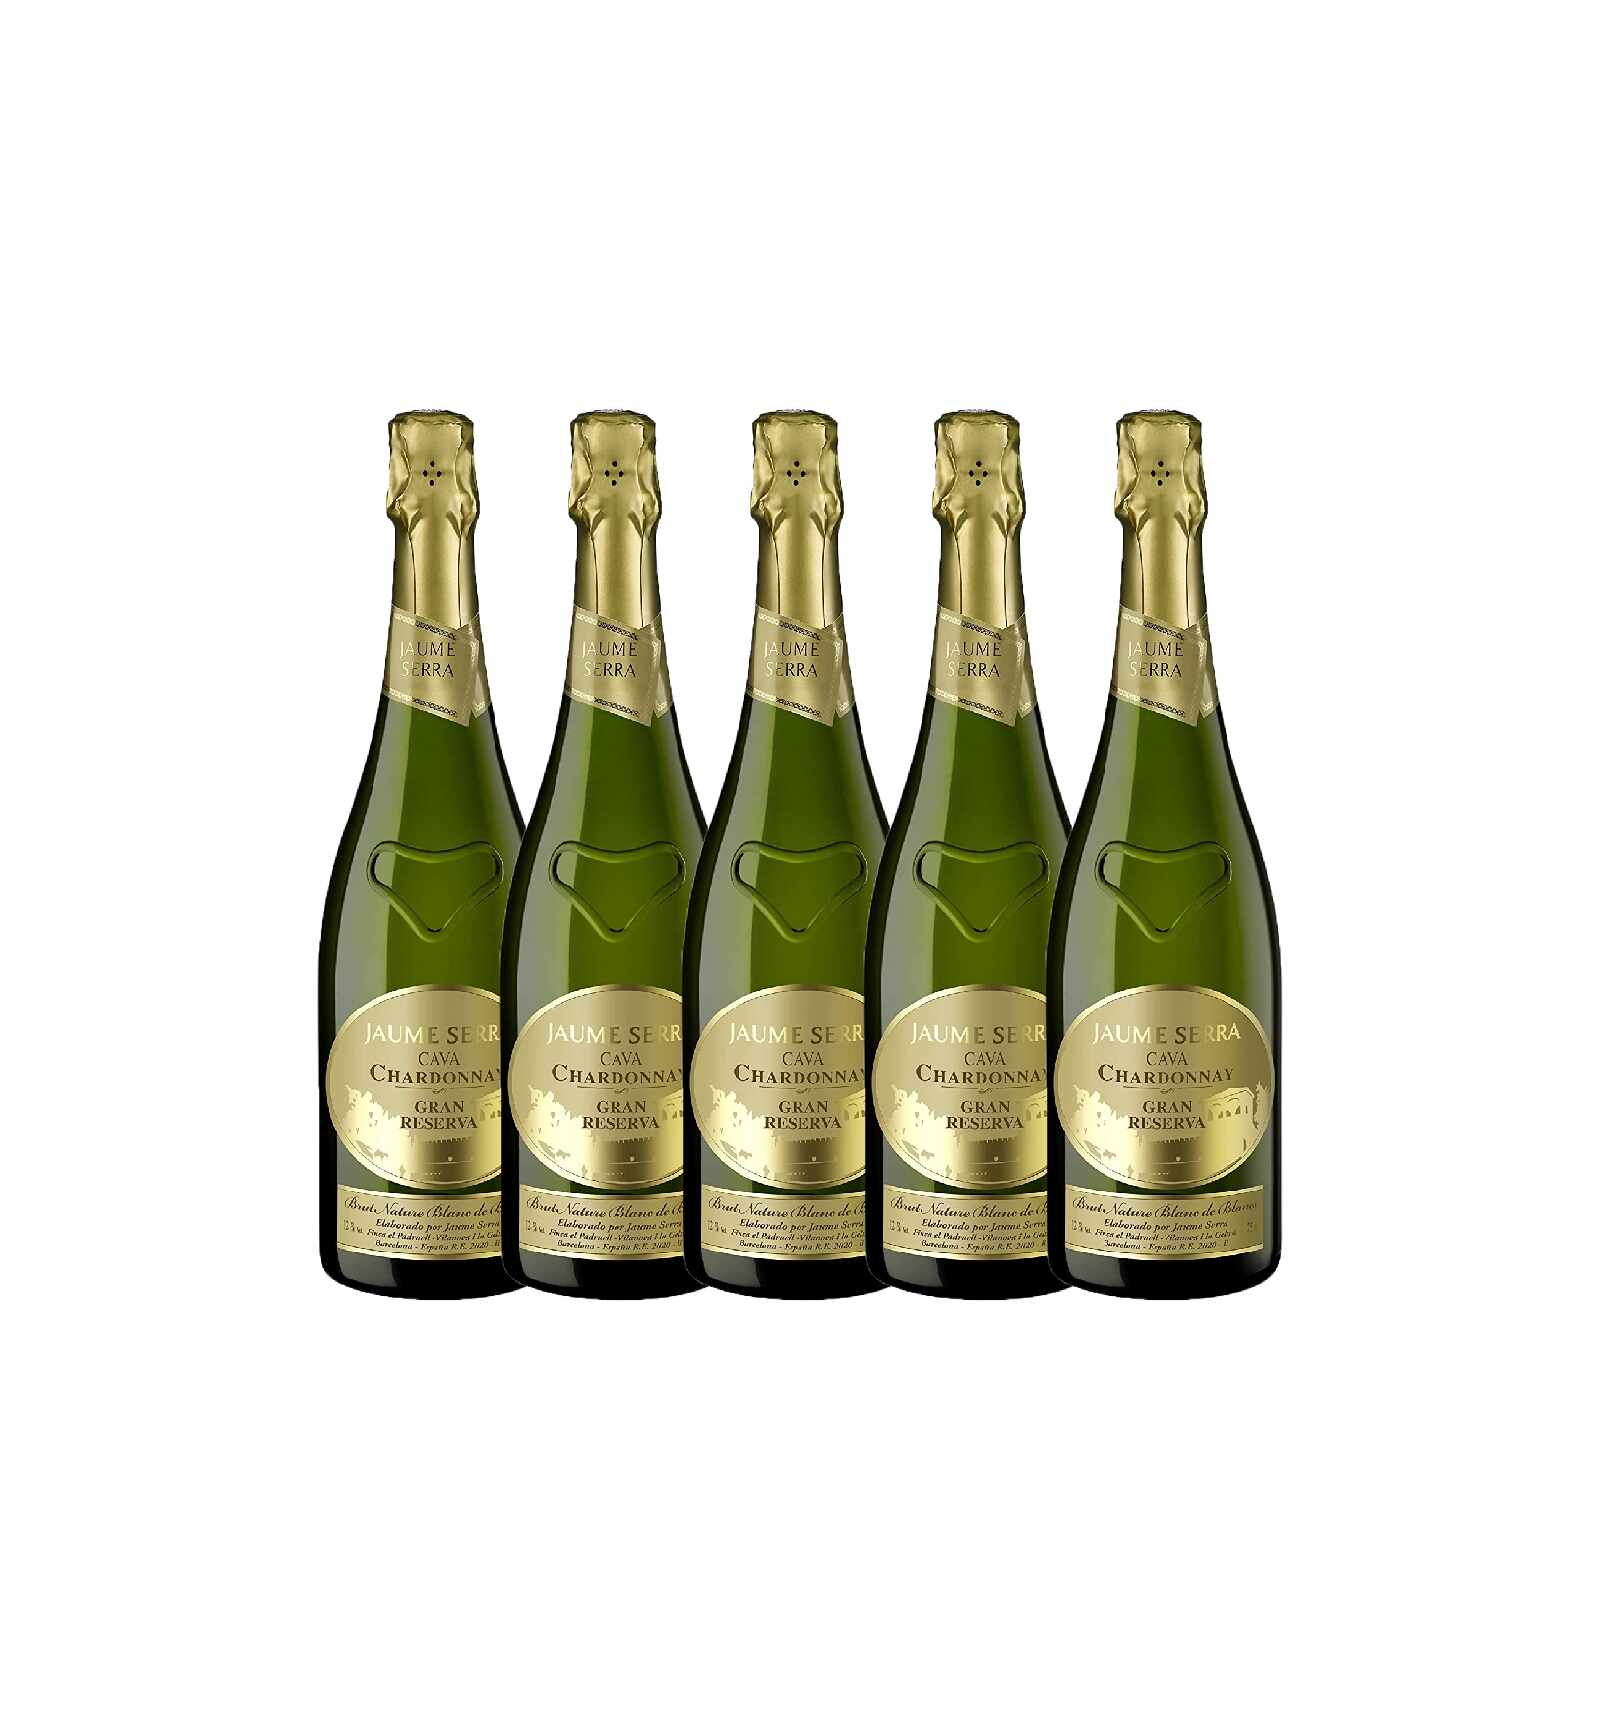 Pachet 5 sticle Vin spumant alb, Chardonnay, Jaume Serra Gran Reserva, 11.5% alc., 0.75L, Spania